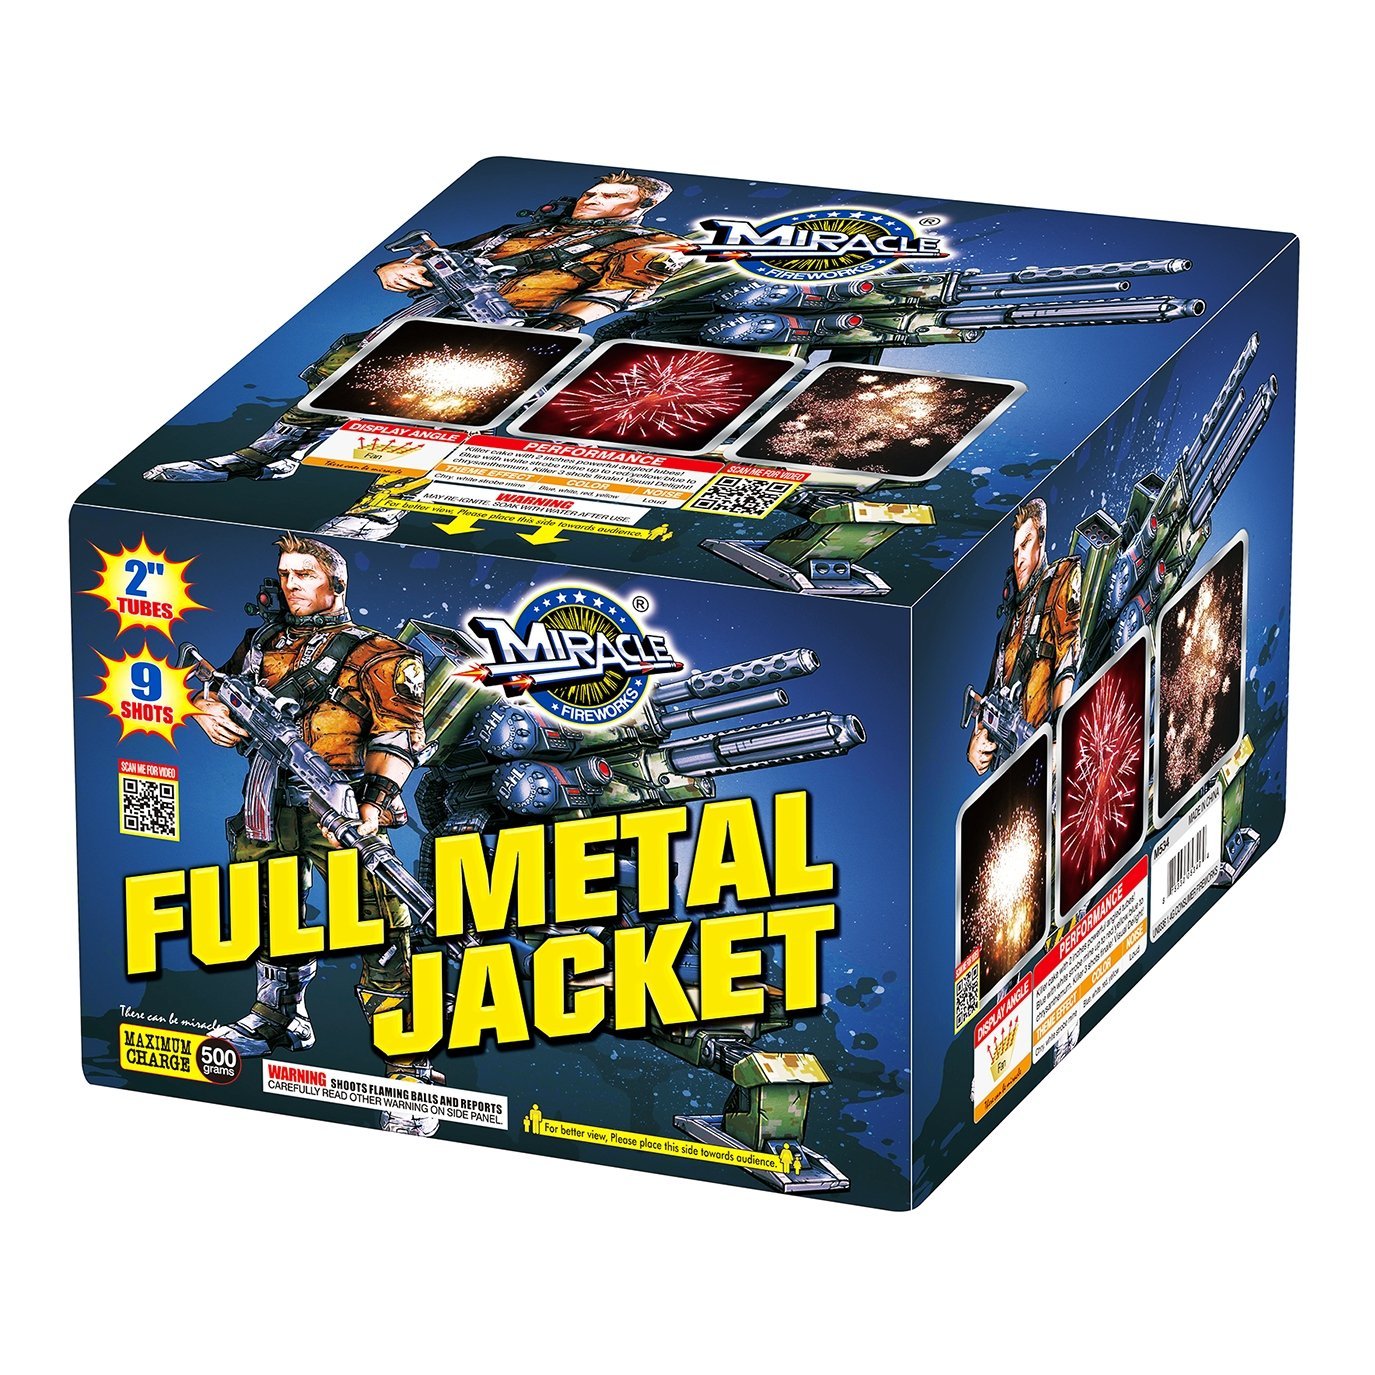 FULL METAL JACKET - Samurai Fireworks